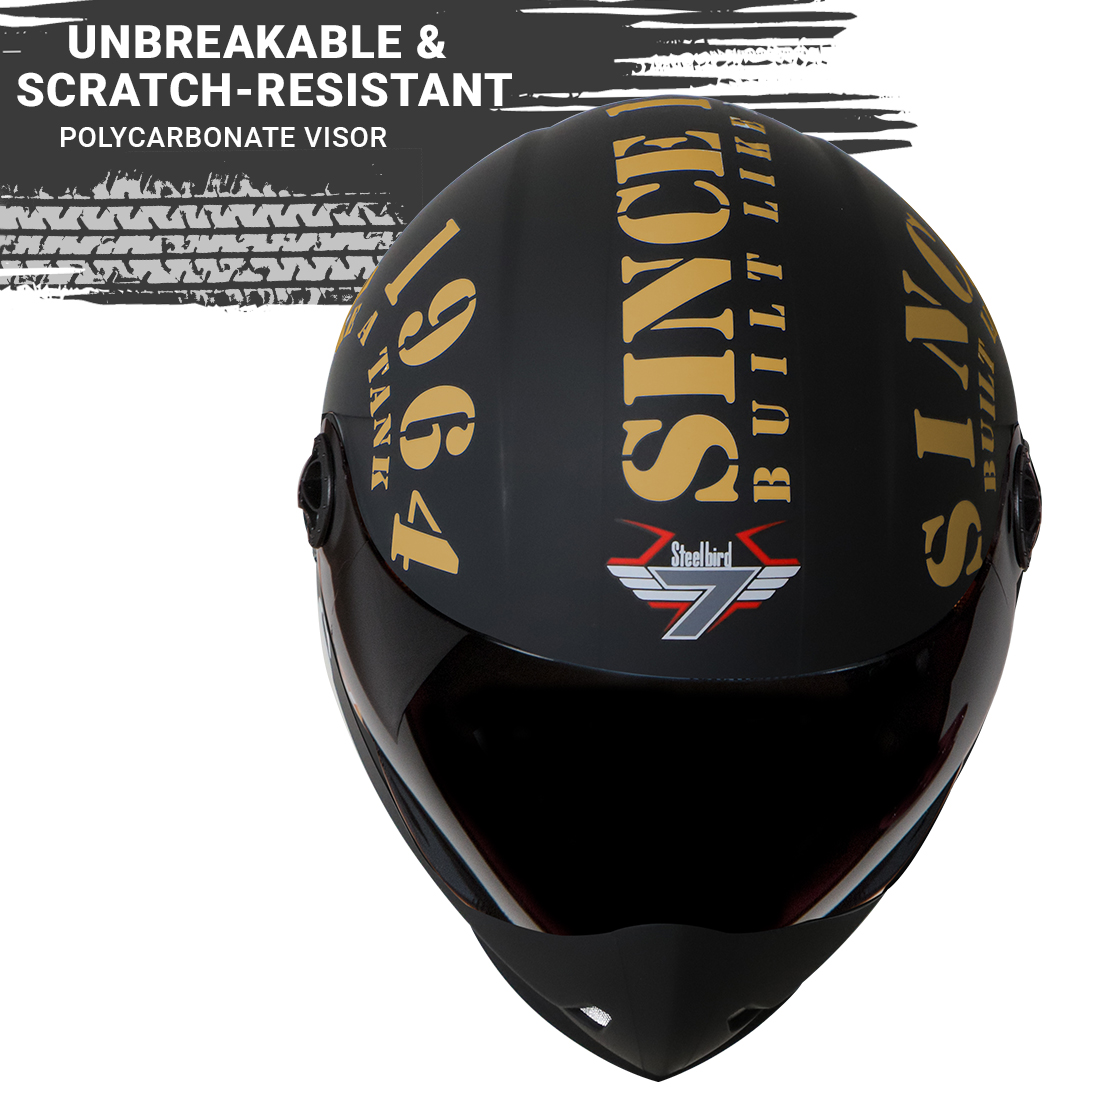 Steelbird SB-50 Adonis Tank Full Face Graphic Helmet Motorbike Helmet (Matt Black Gold With Smoke Visor)